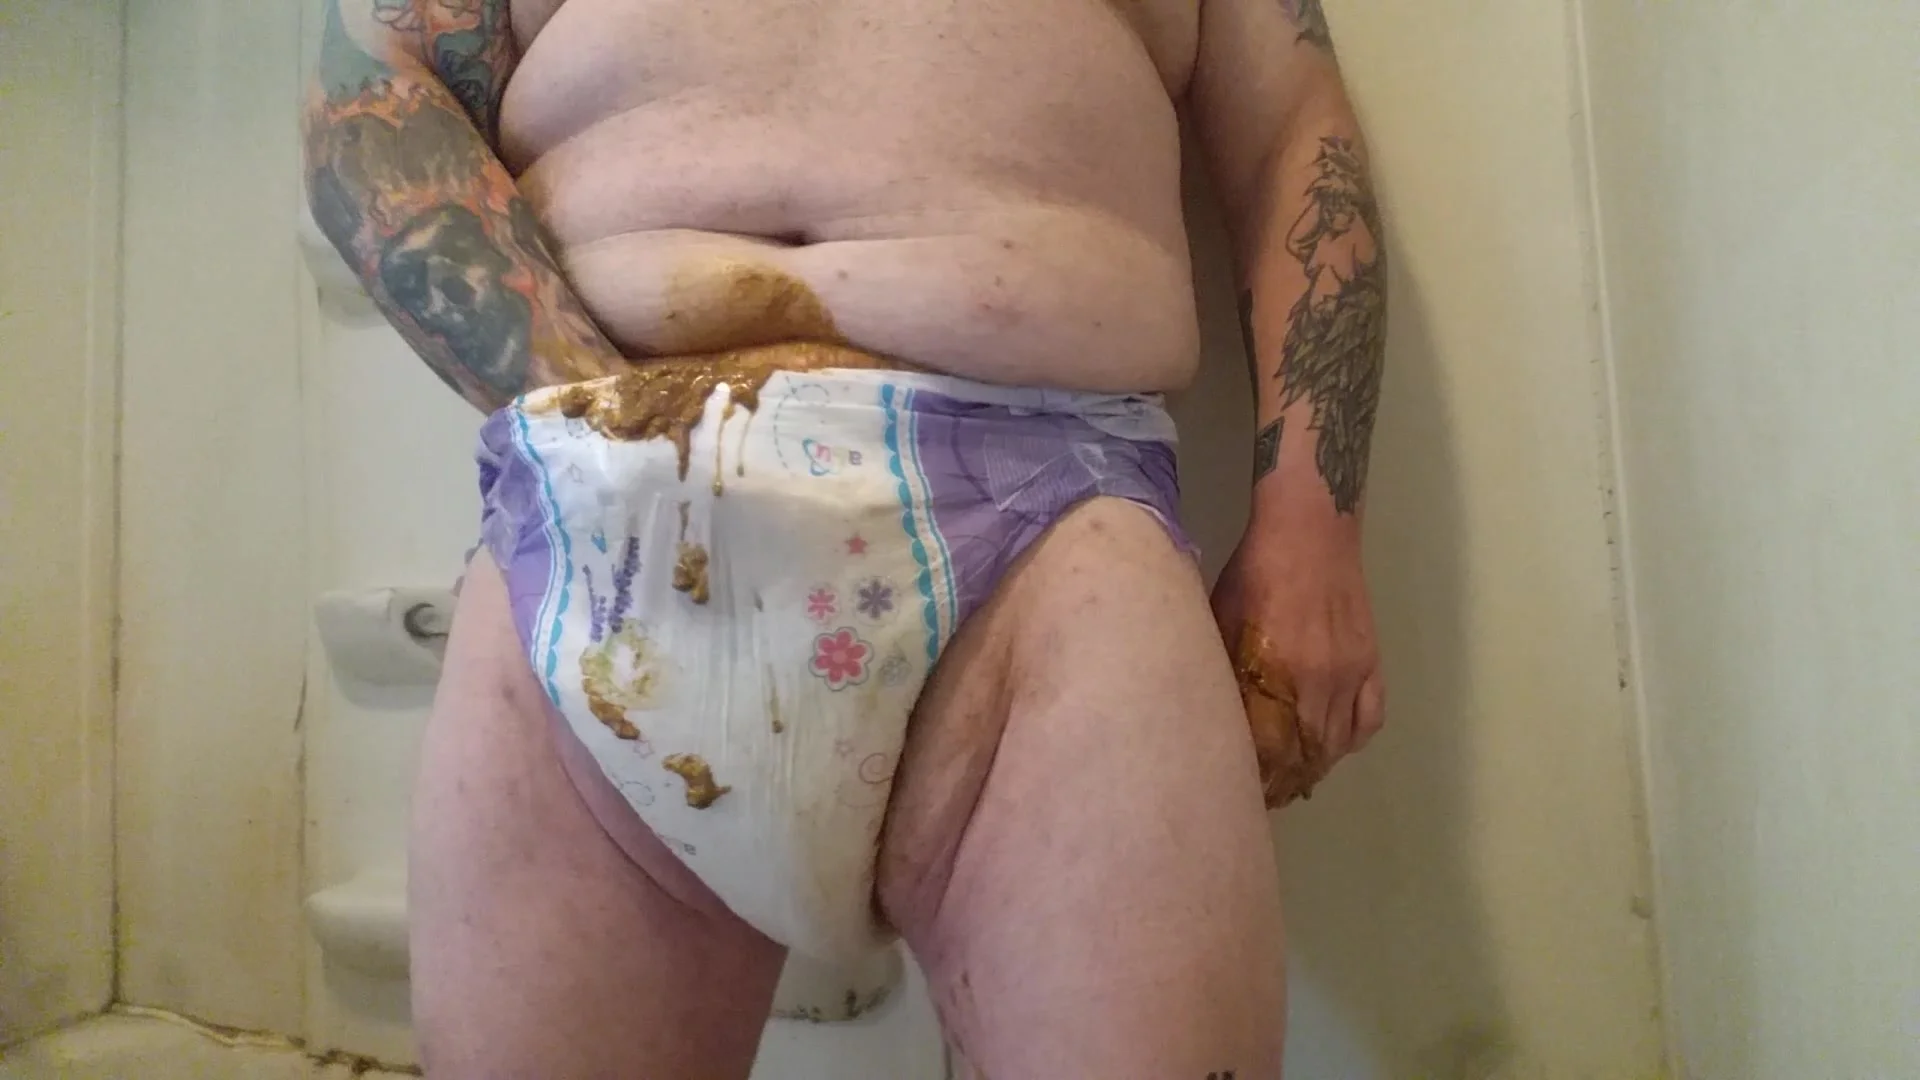 Chubby Diaper Porn - Diapered Chub gets messy - ThisVid.com